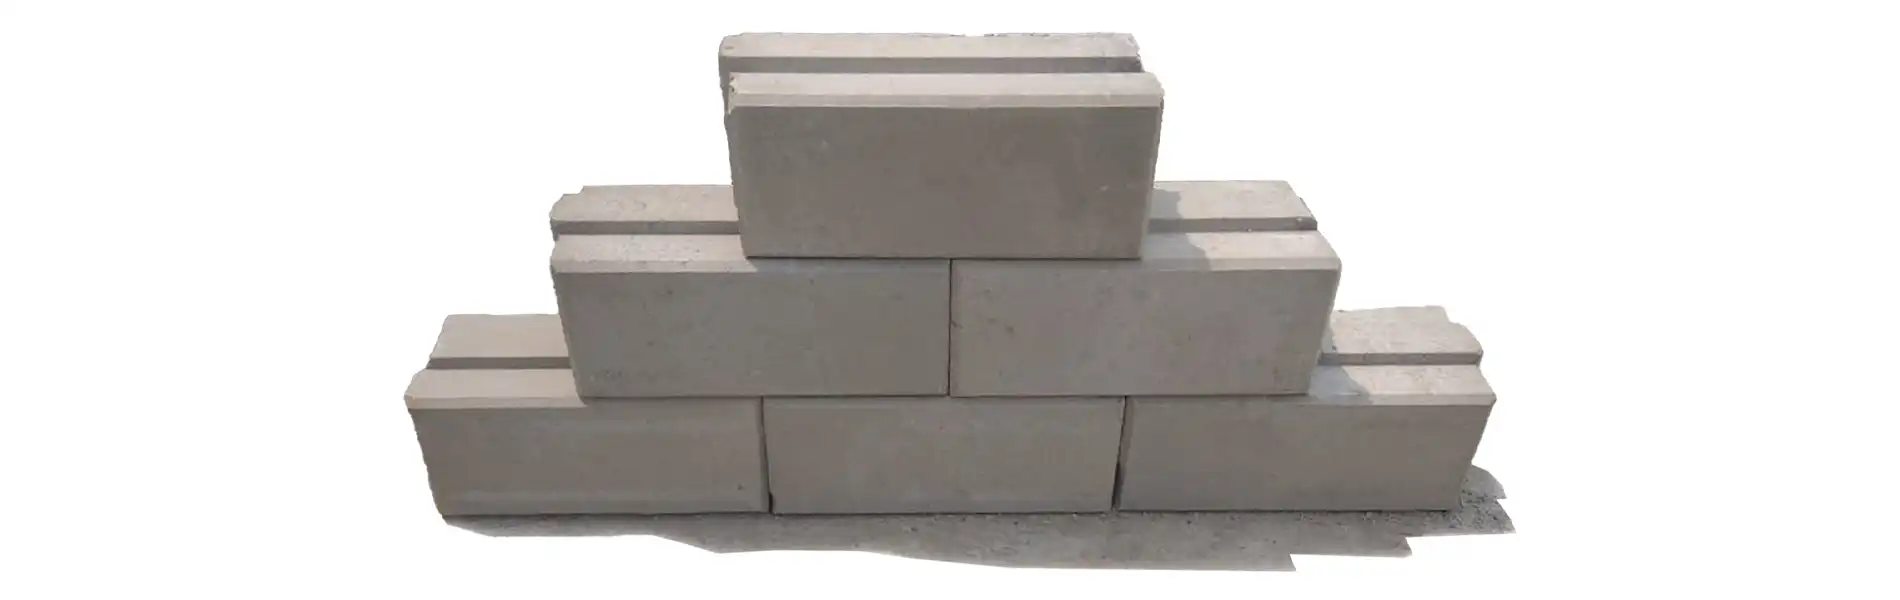 Interlocking concrete blocks